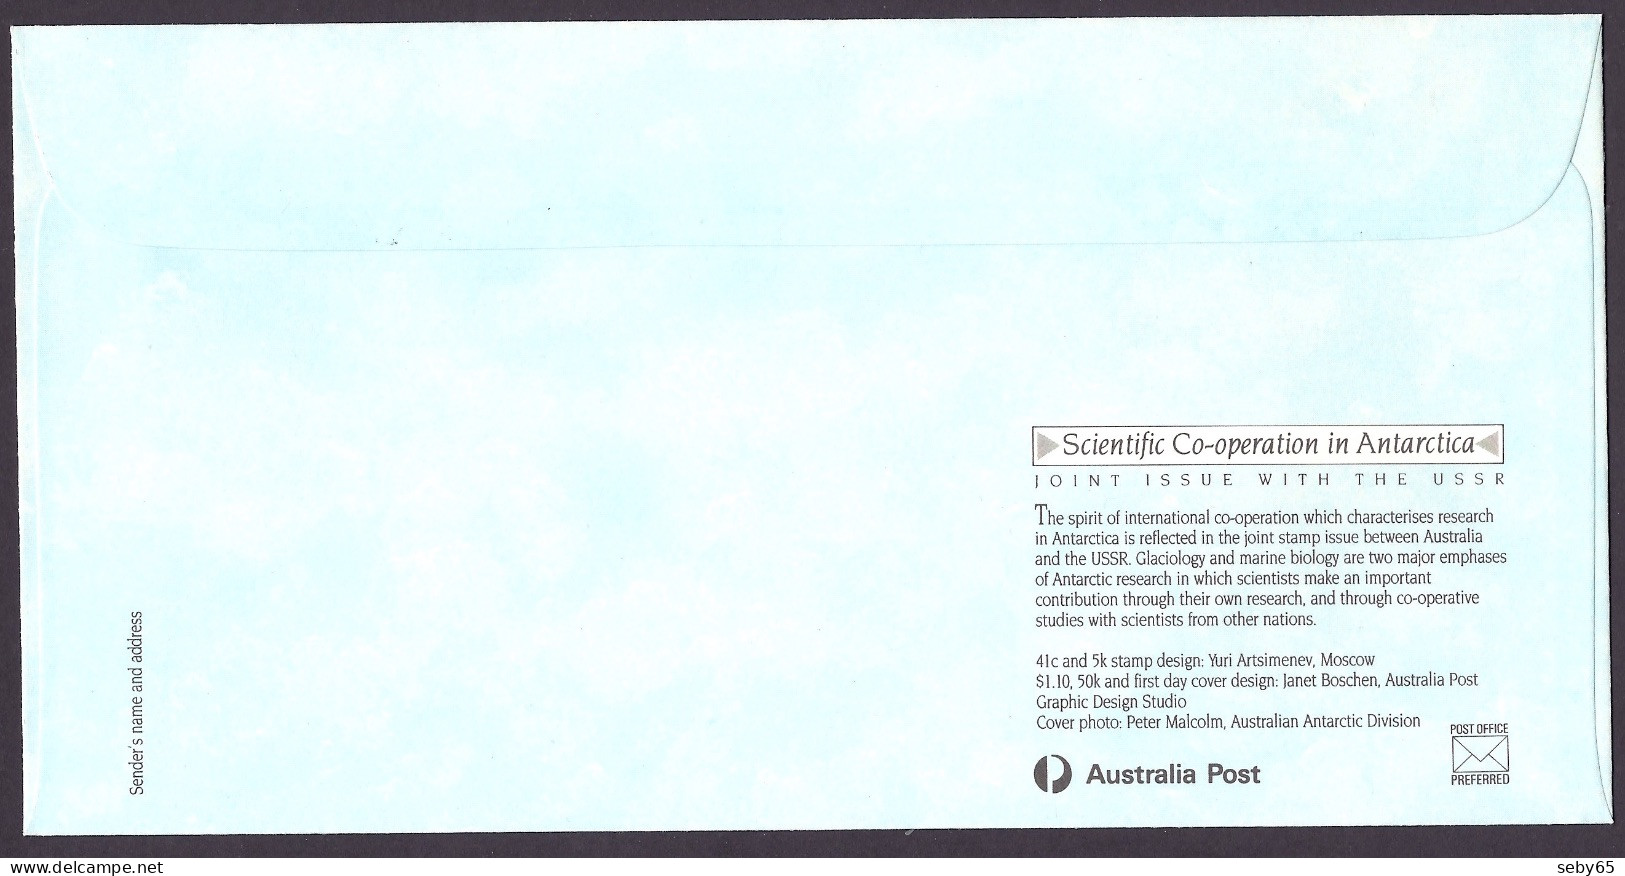 Australia 1990 - Antarctica, USSR Joint Issue, Scientific Co-operation, Glaciers, South Pole, Antarctic, Russia - FDC - FDC